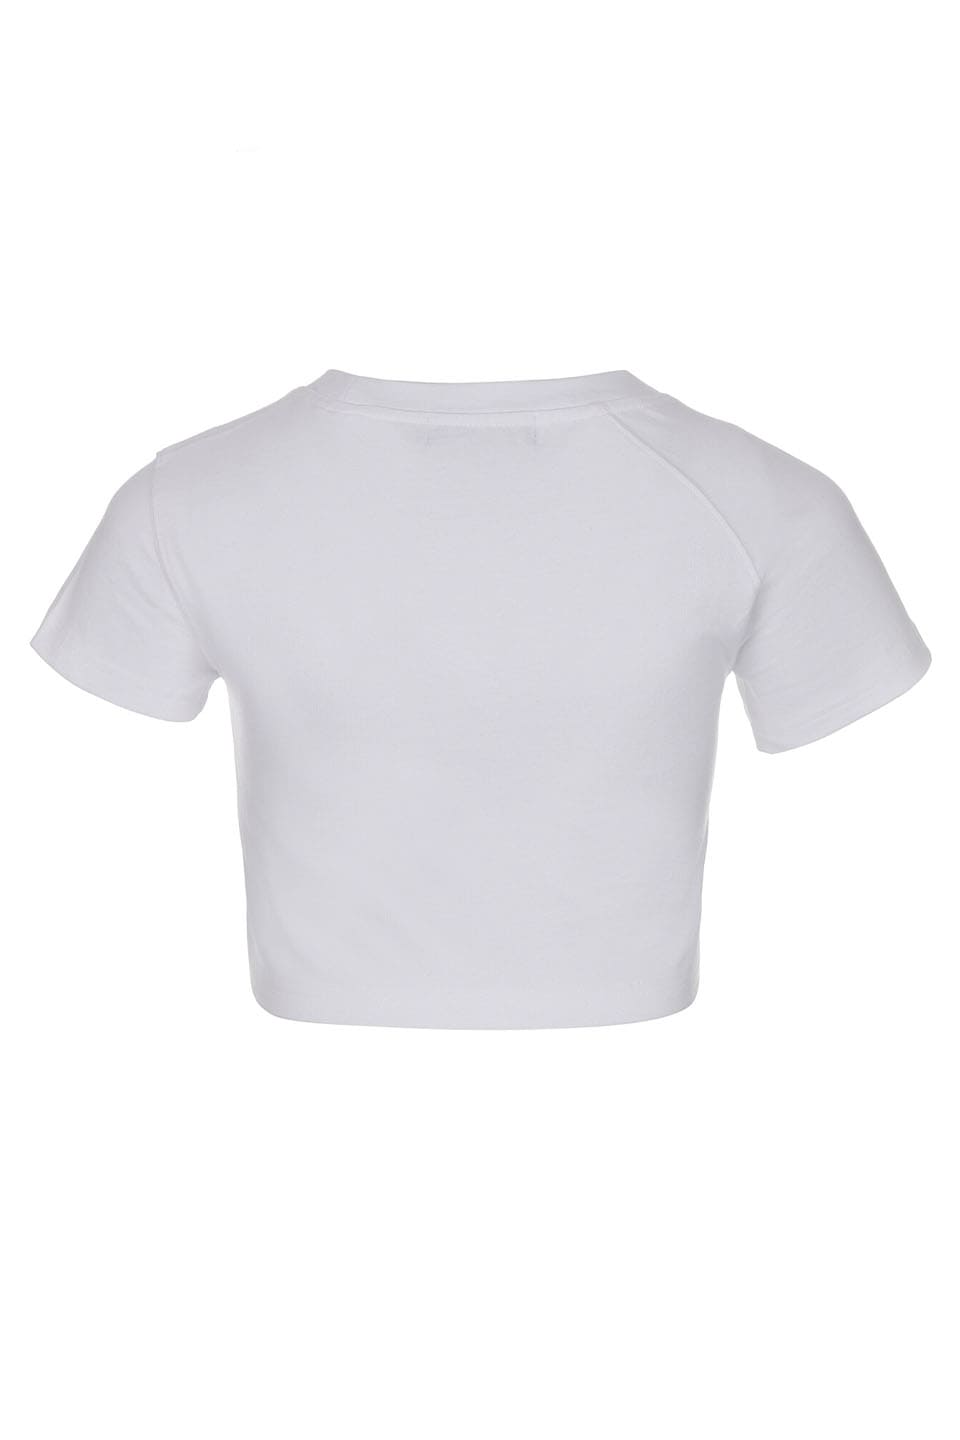 Unbalance Metal Clover Logo Crop T-Shirts Women'S